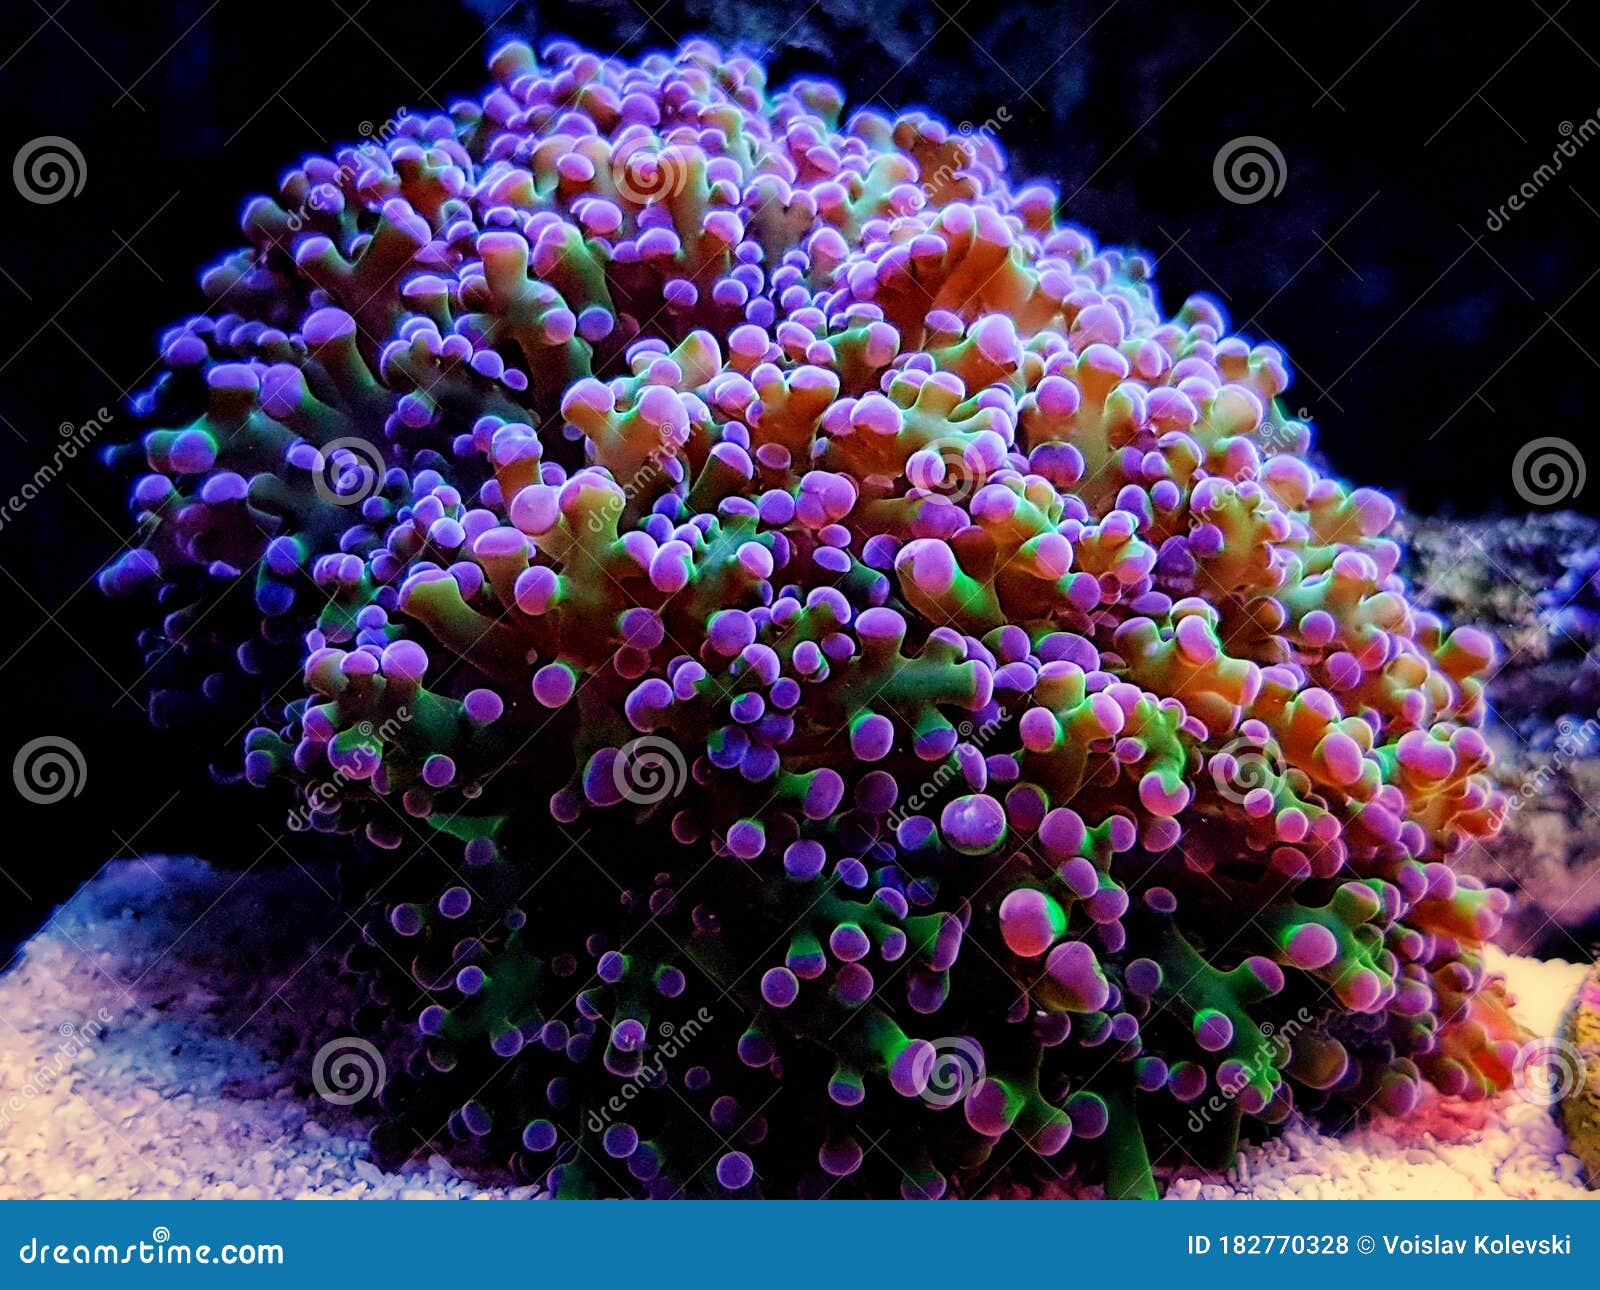 euphyllia divisa aka frogspawn lps coral